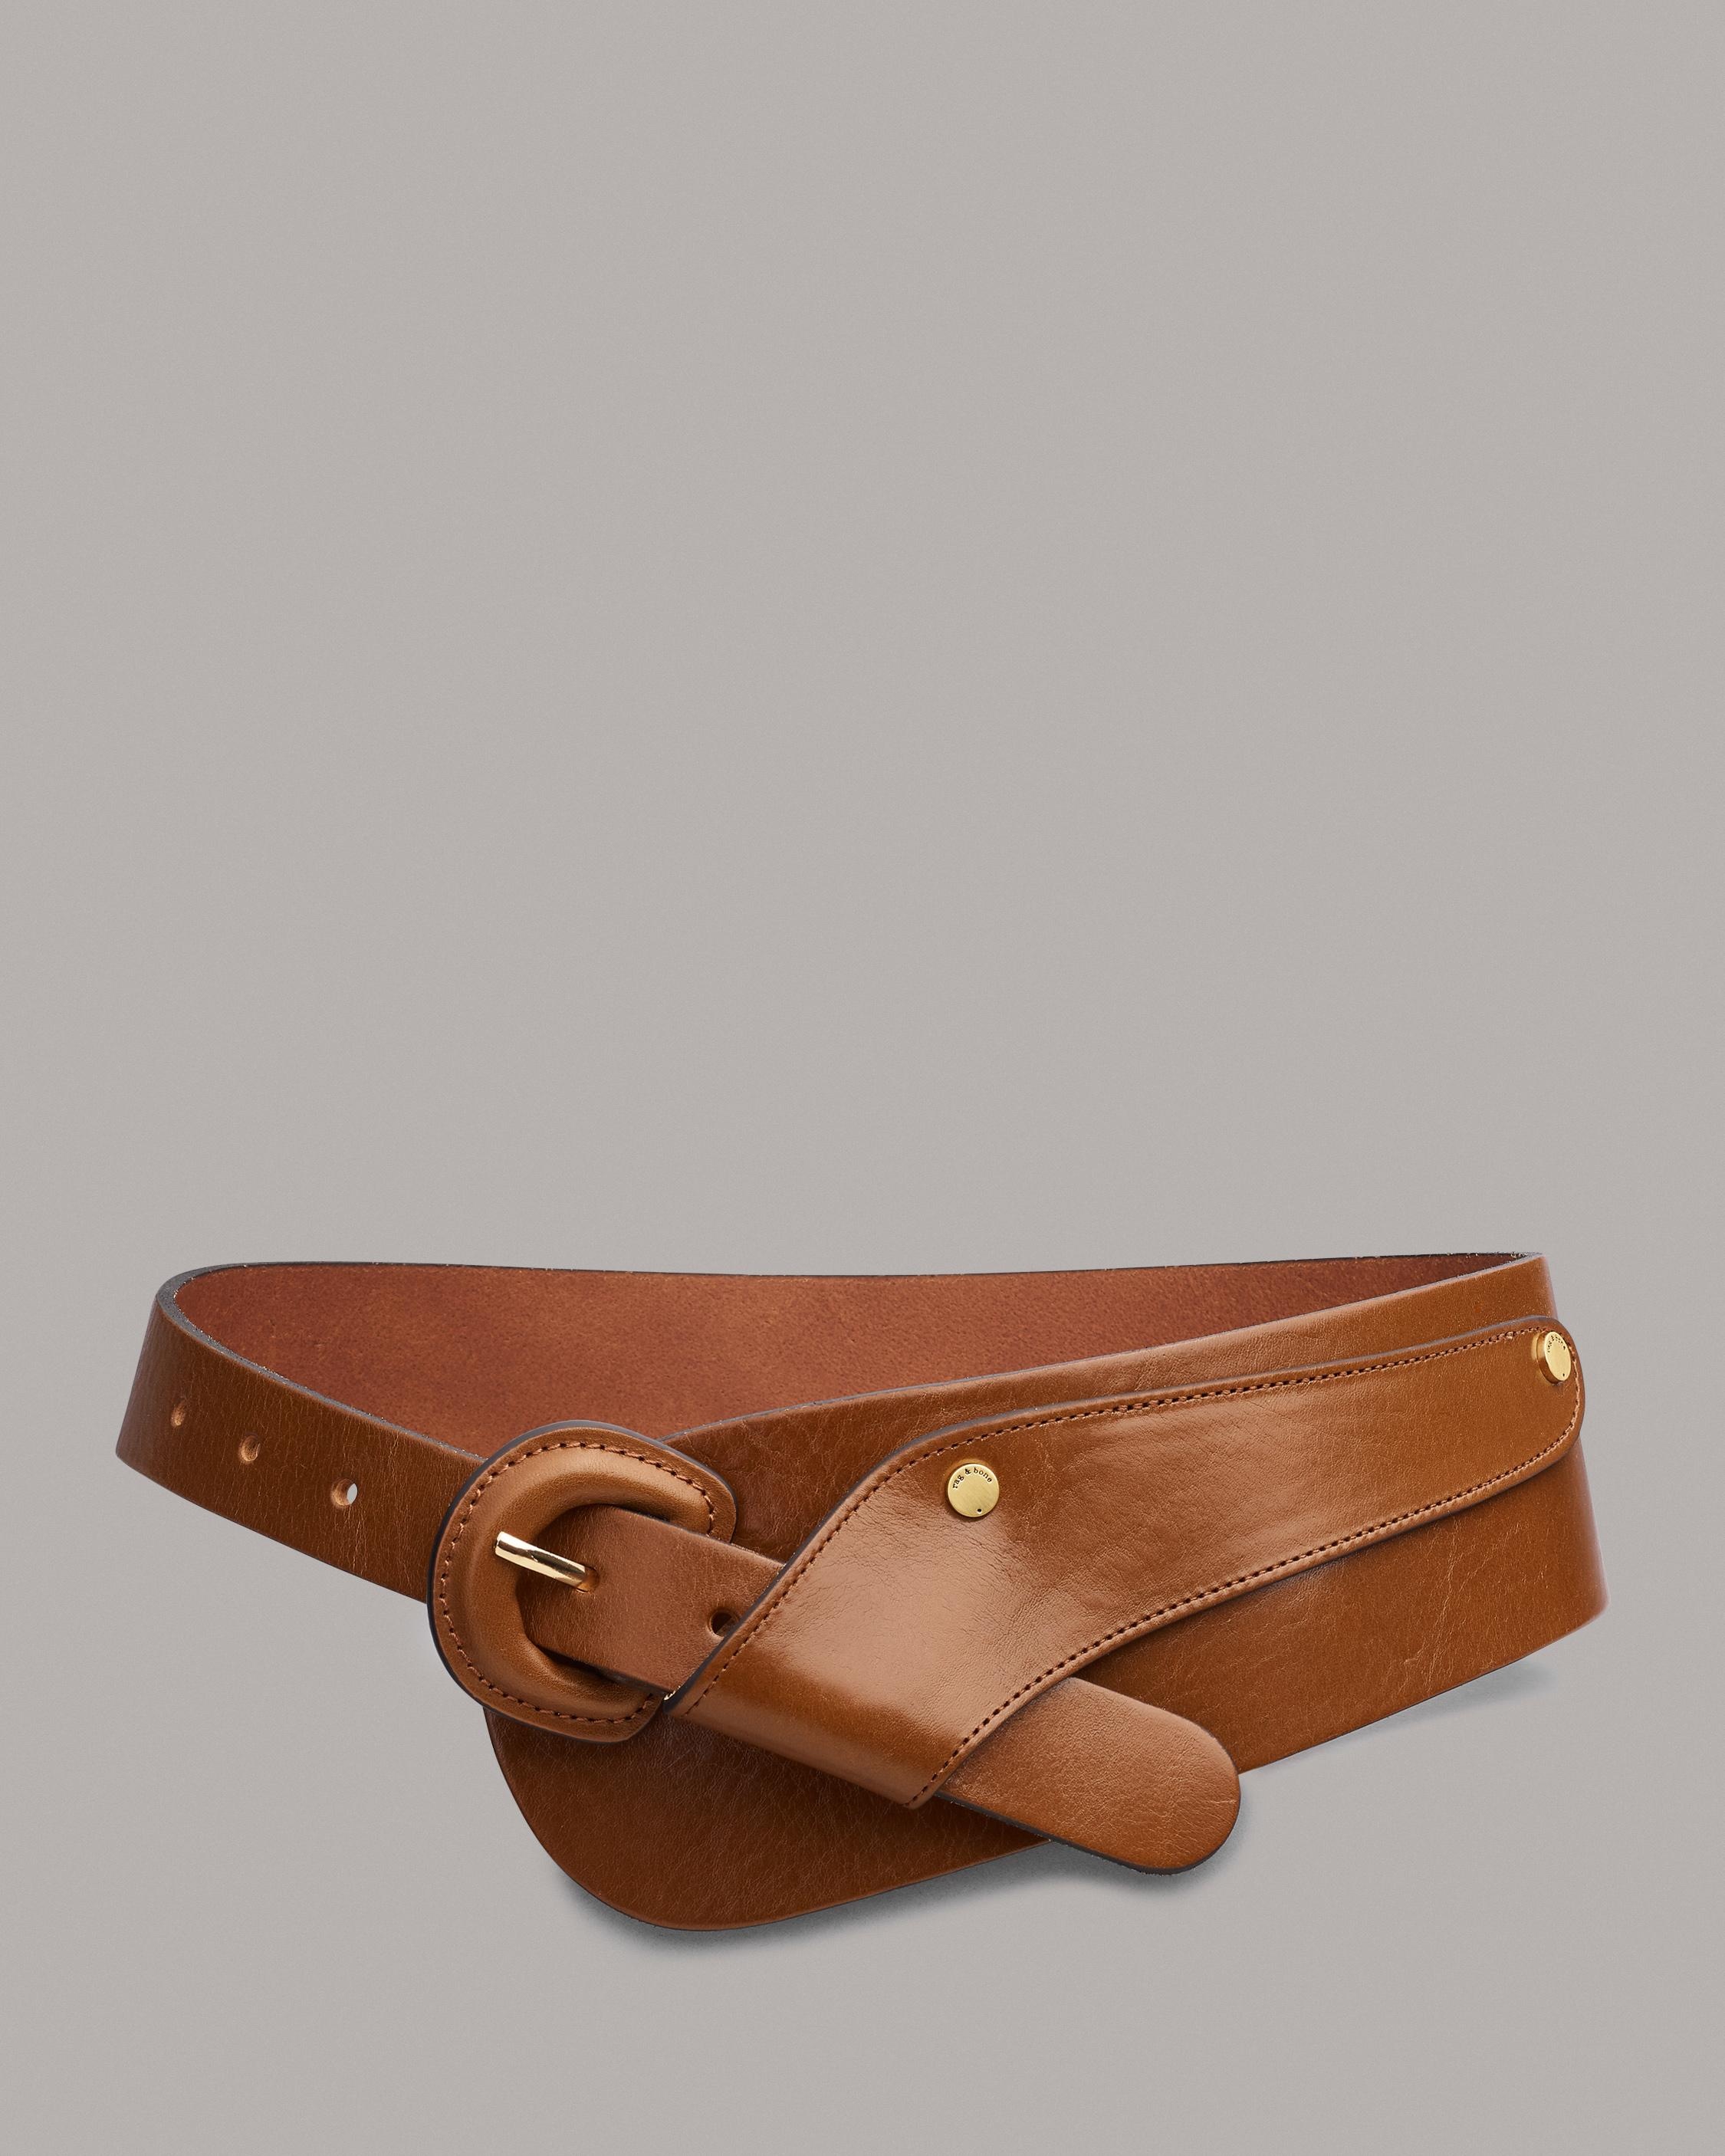 Lanson Waist Belt
Leather Belt - 1